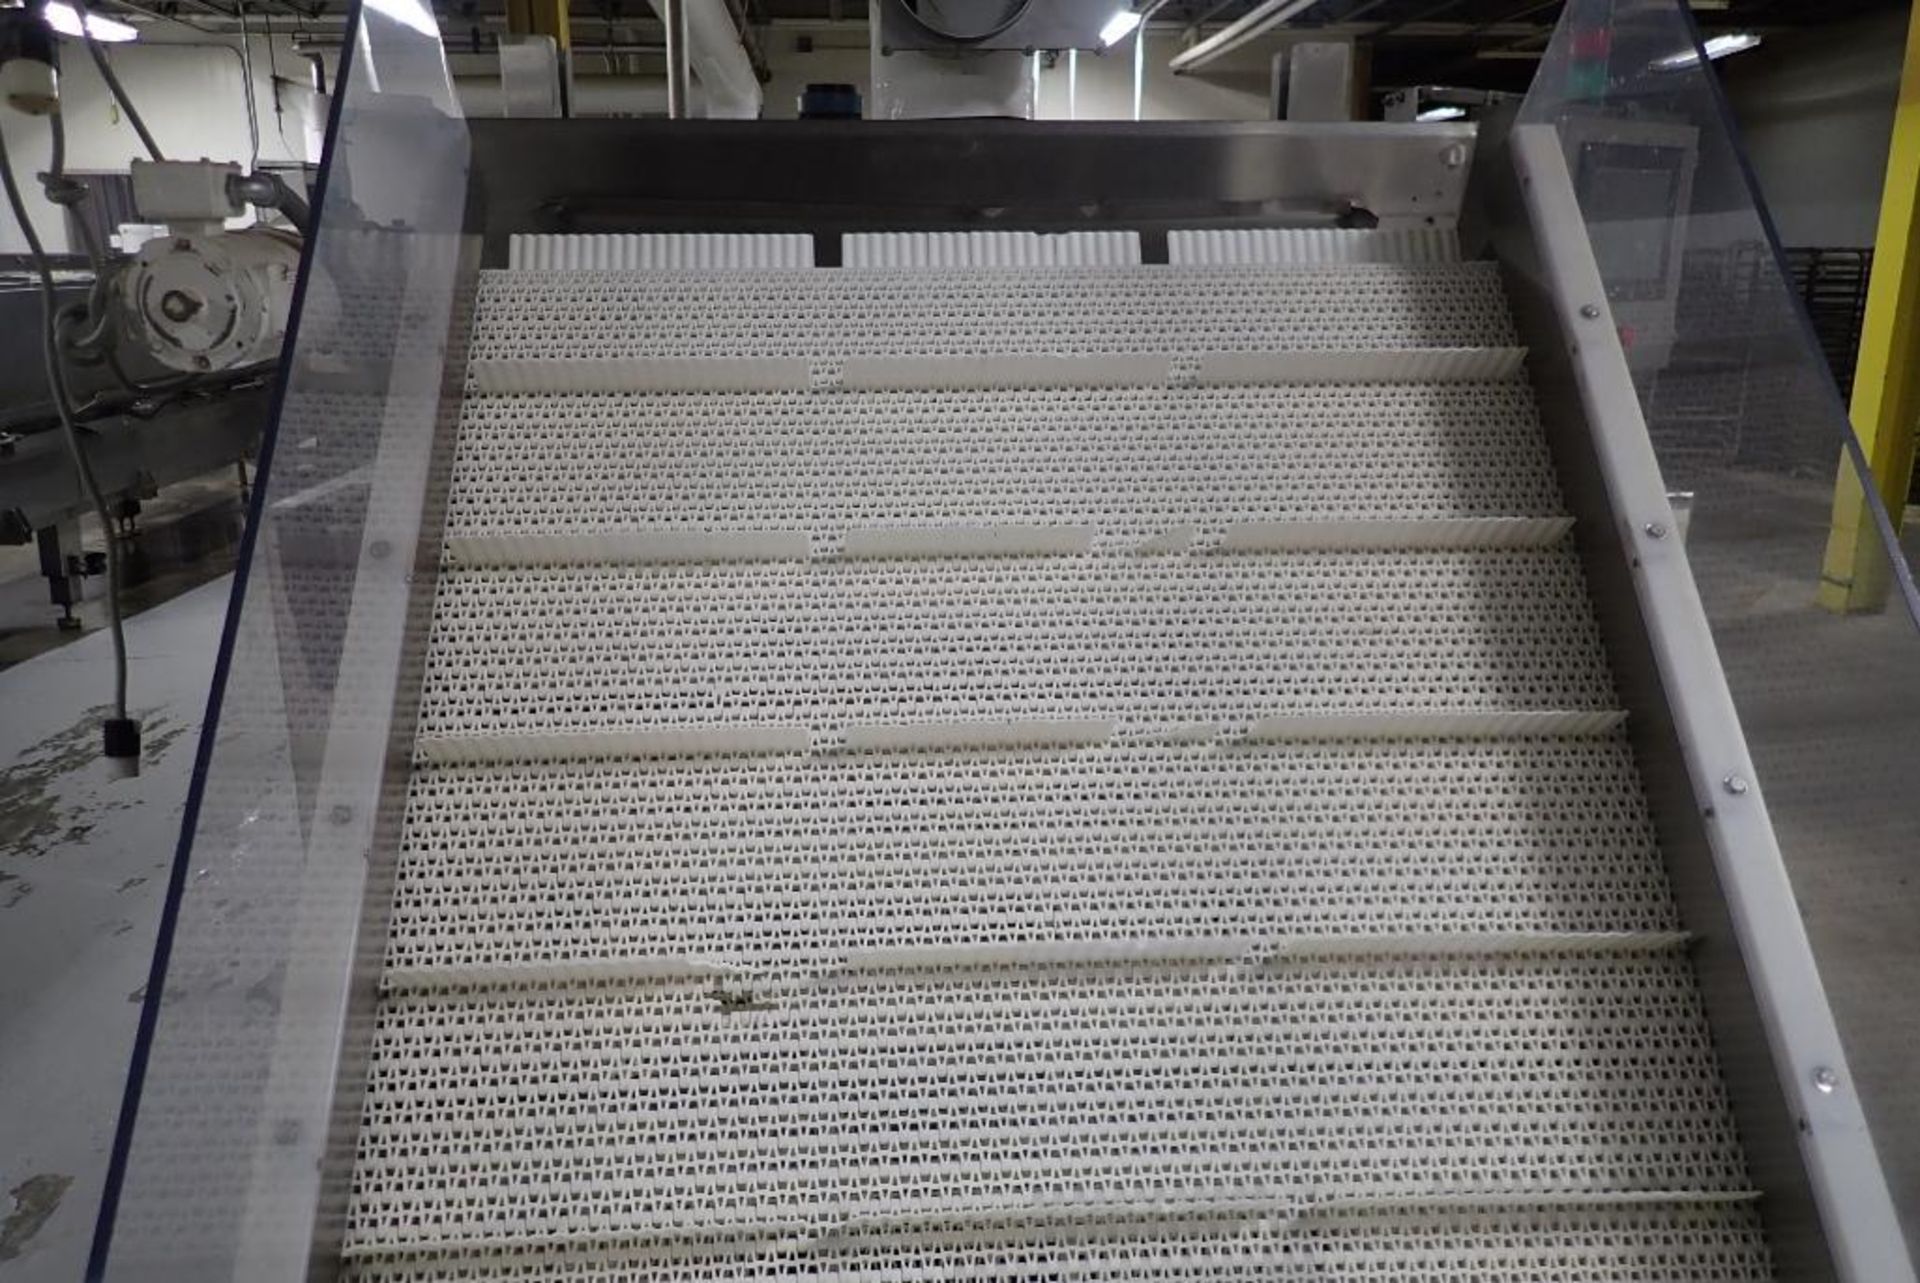 Kleenline incline cleated belt conveyor - Image 6 of 10